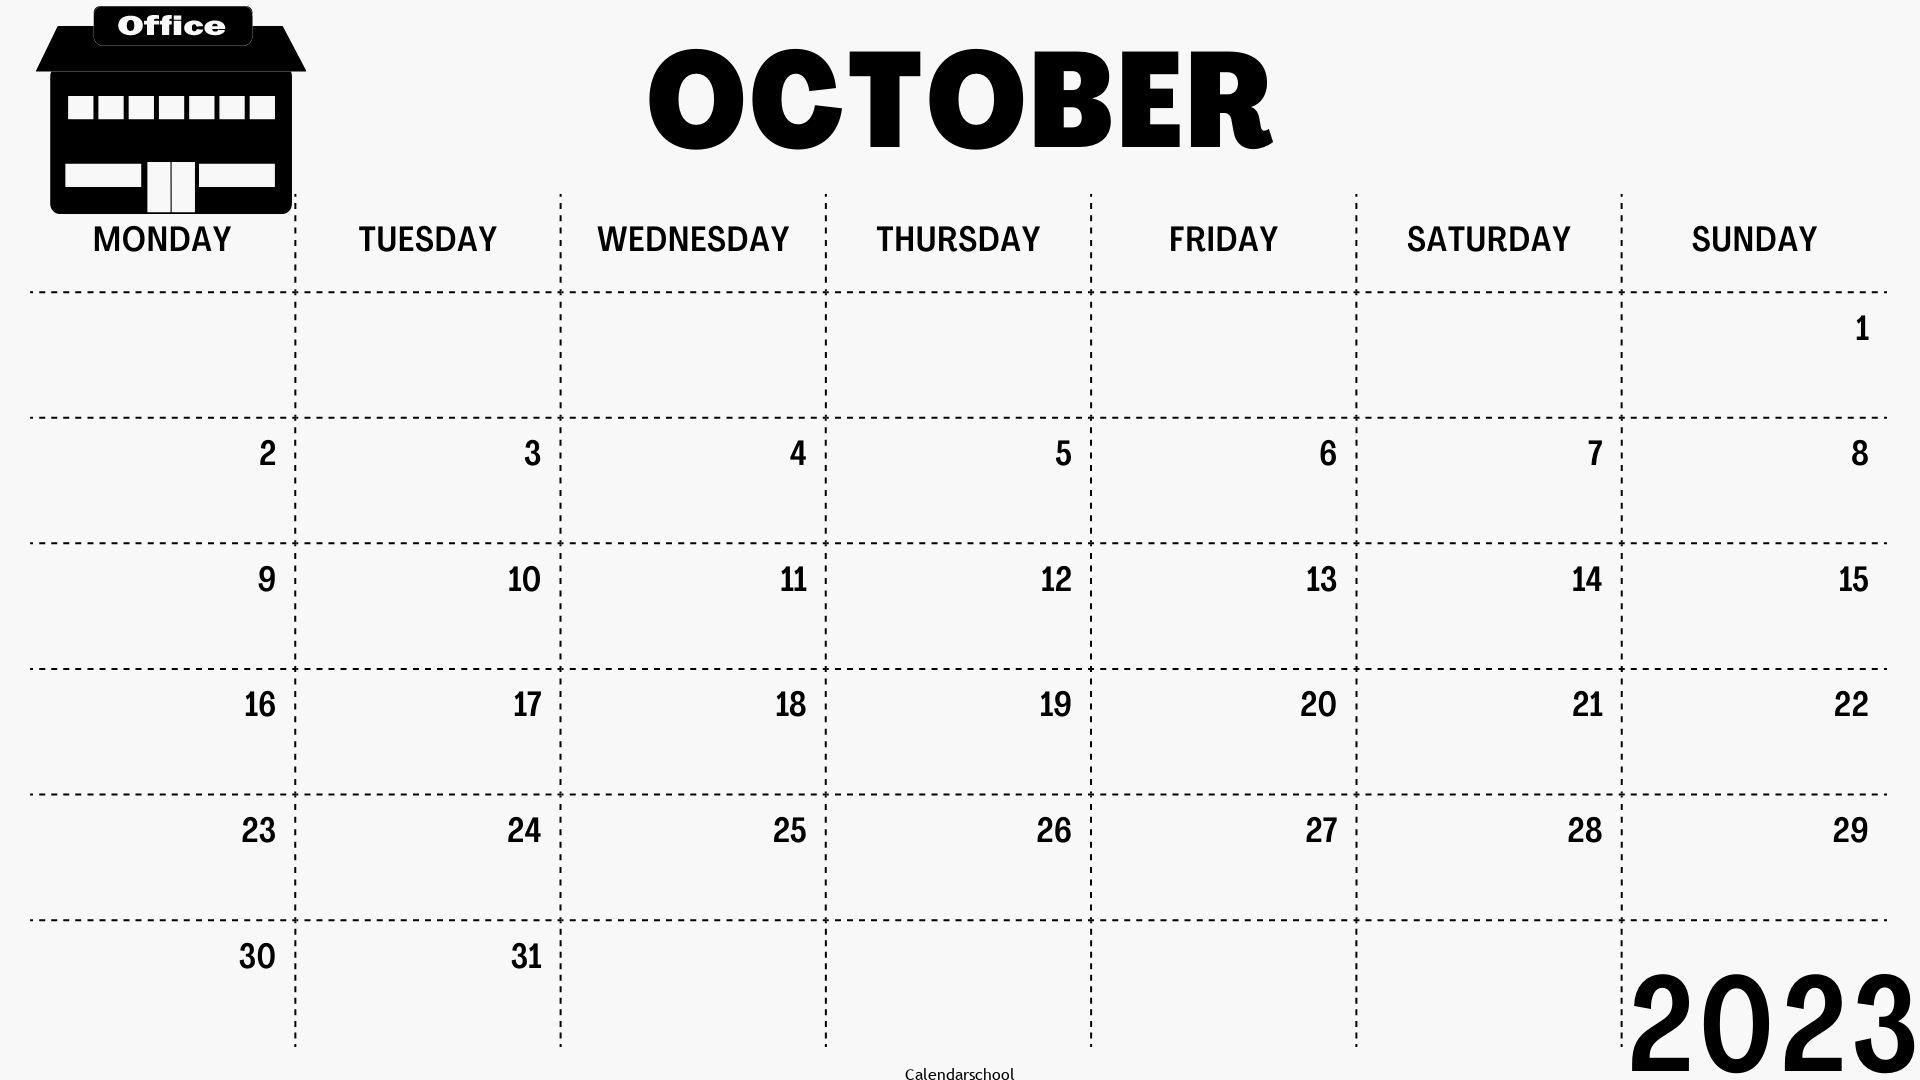 October 2023 Disney Crowd Calendar